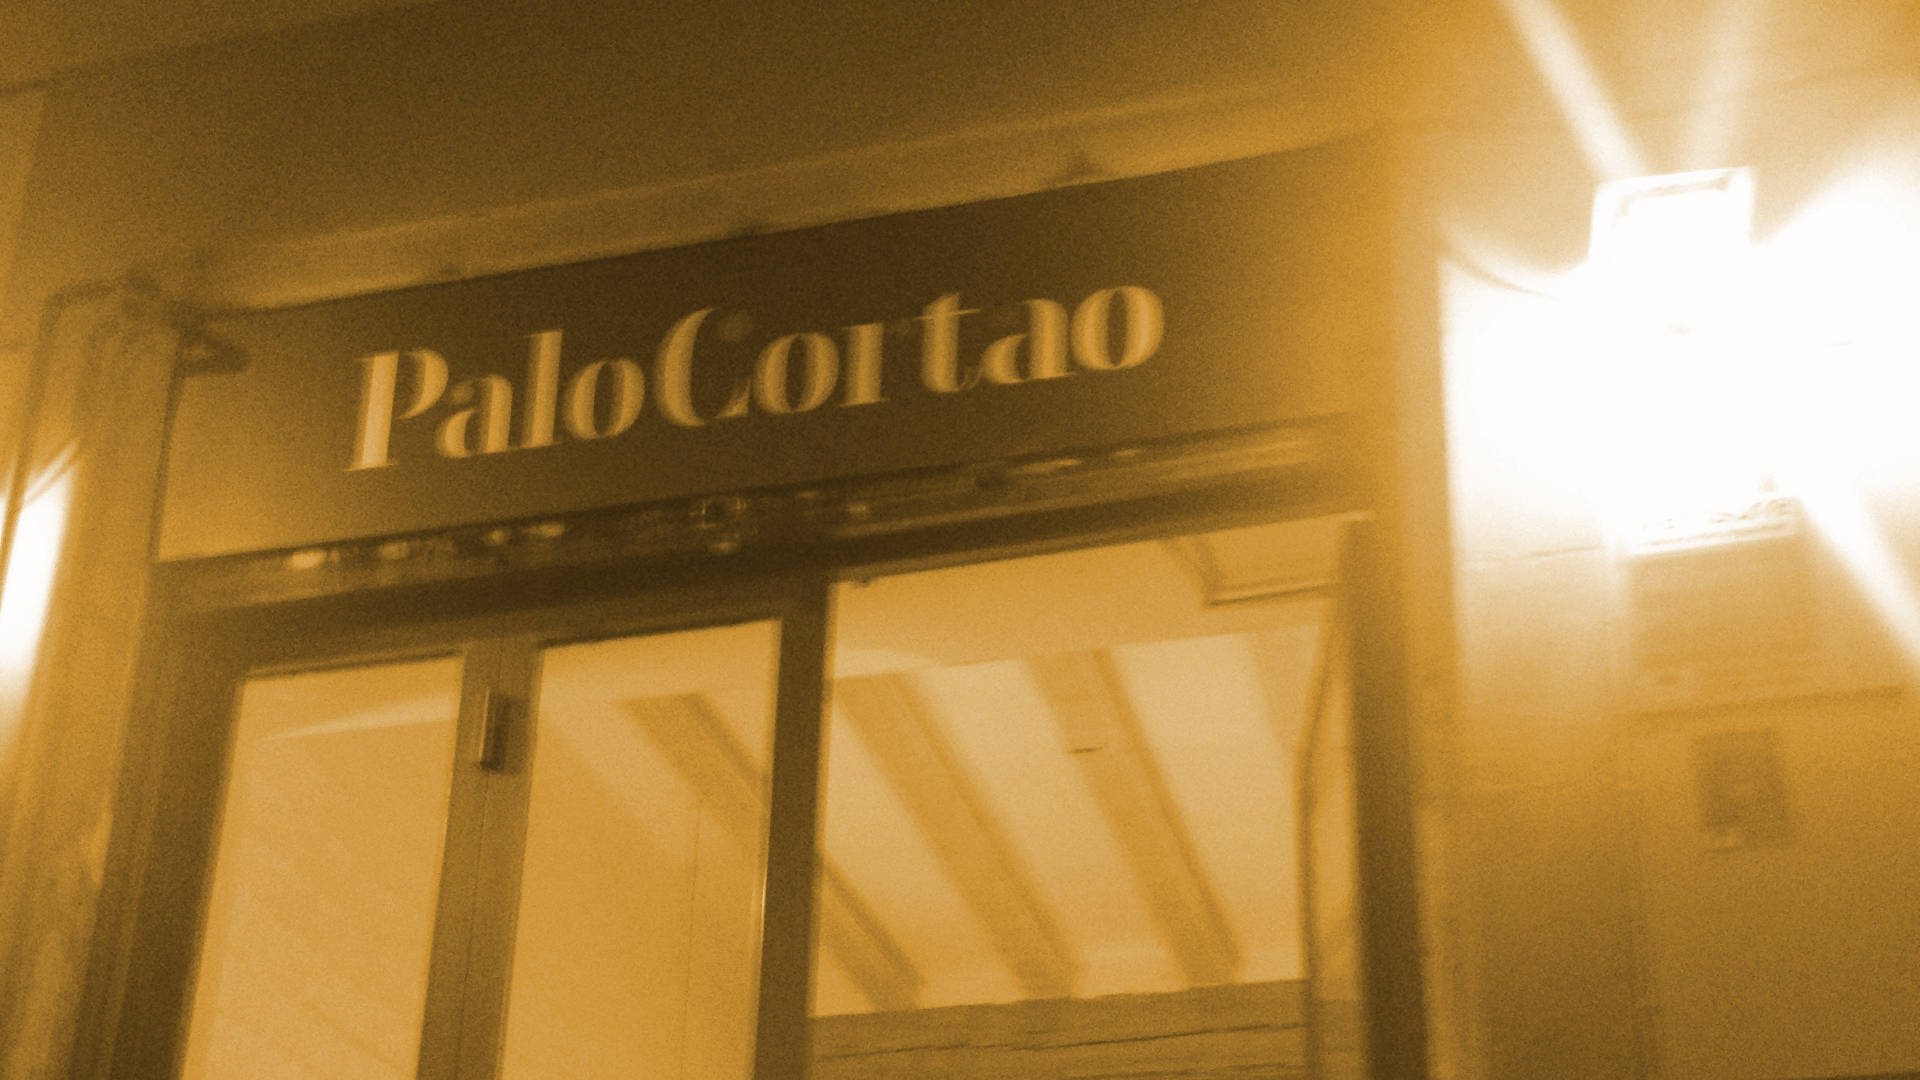 Palo Cortao